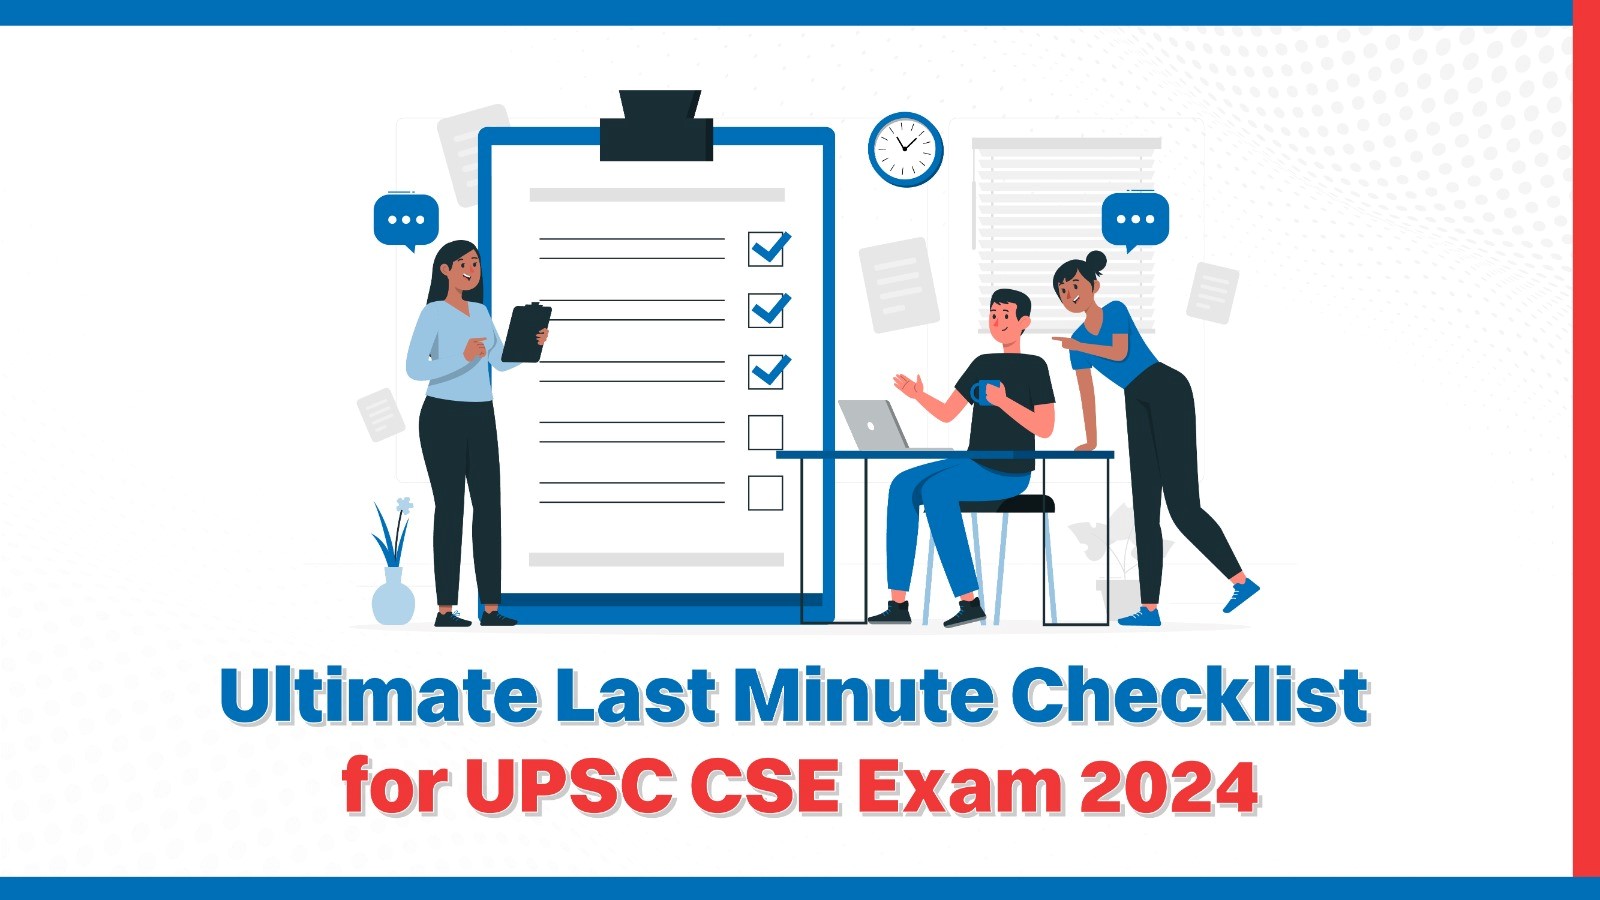 Ultimate Last Minute Checklist for UPSC CSE Exam 2024.jpg